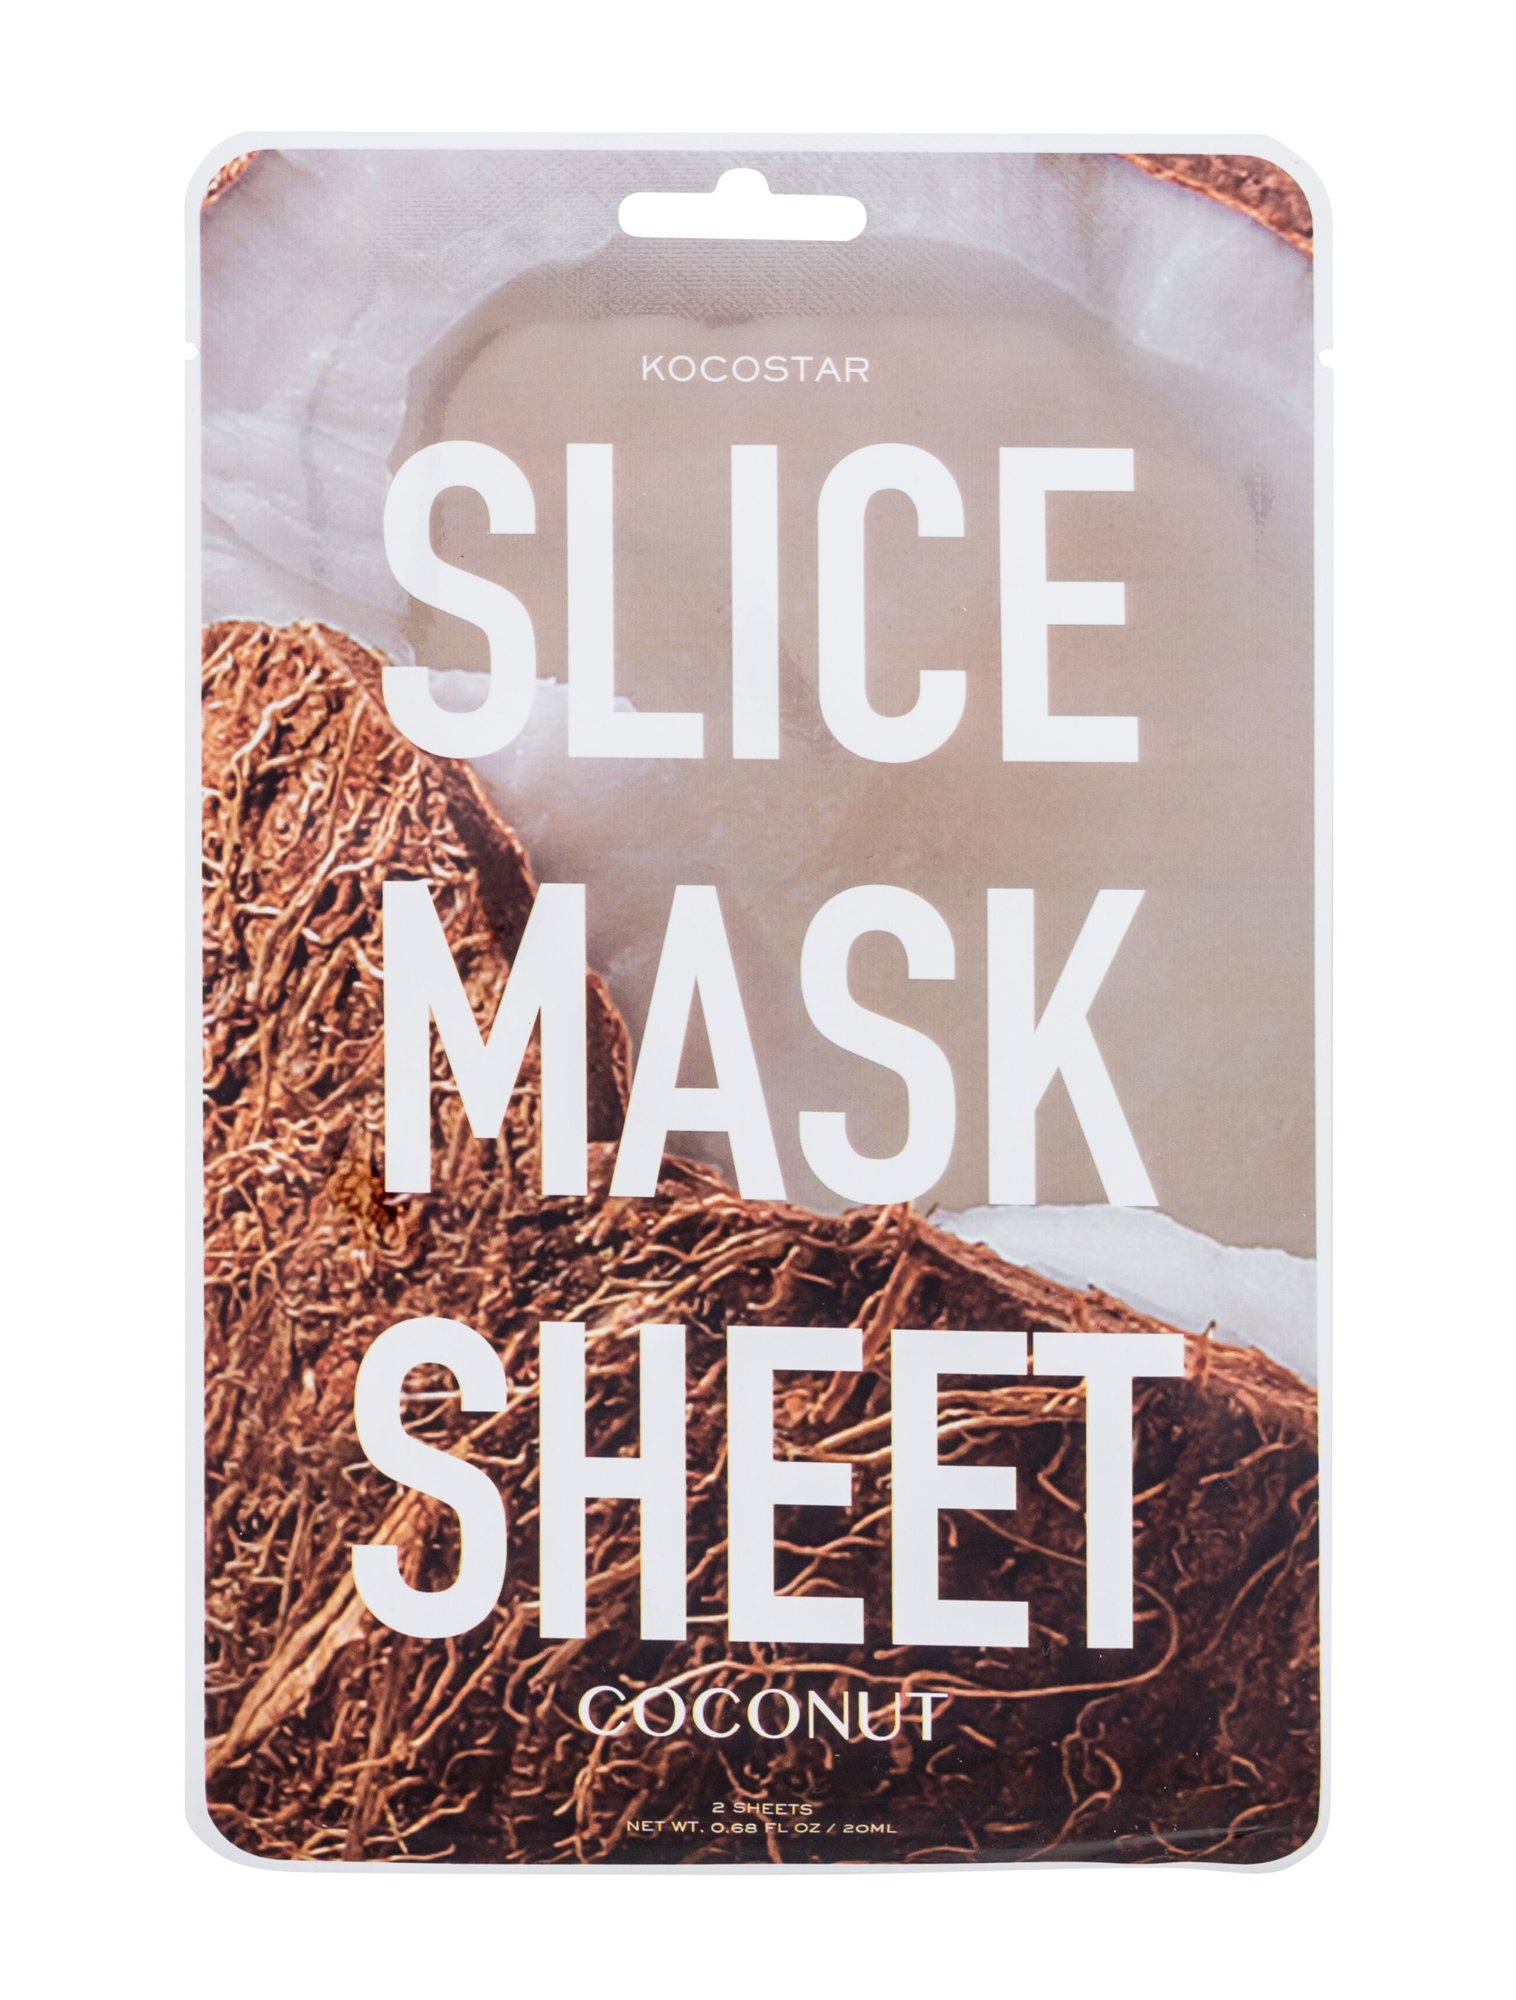 Kocostar Slice Mask Coconut Veido kaukė